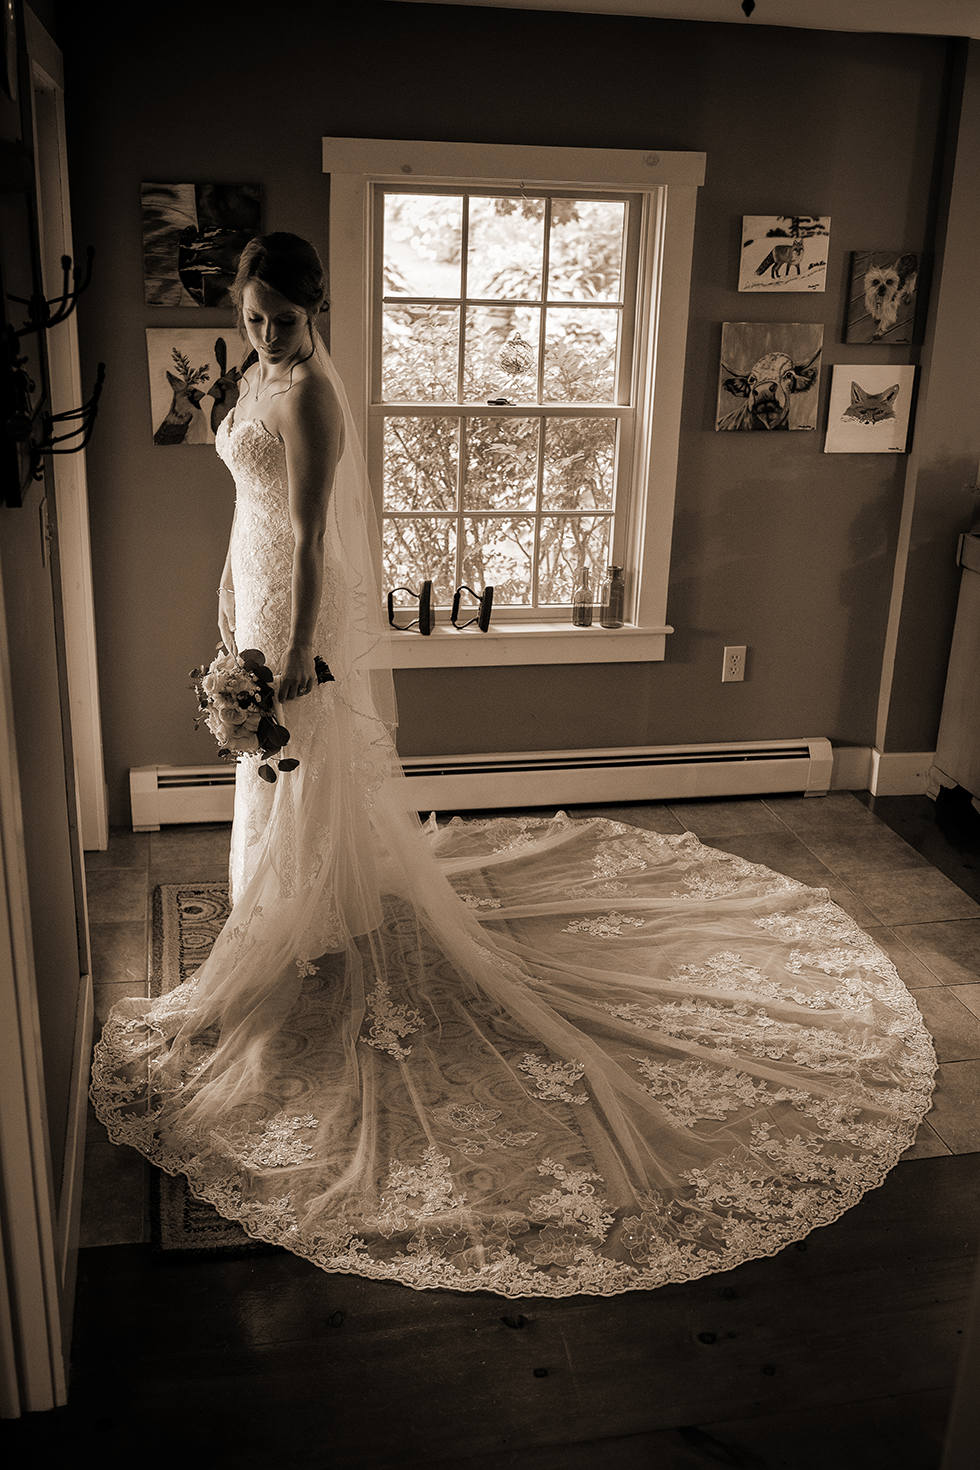 Bride in wedding gown sepia tone